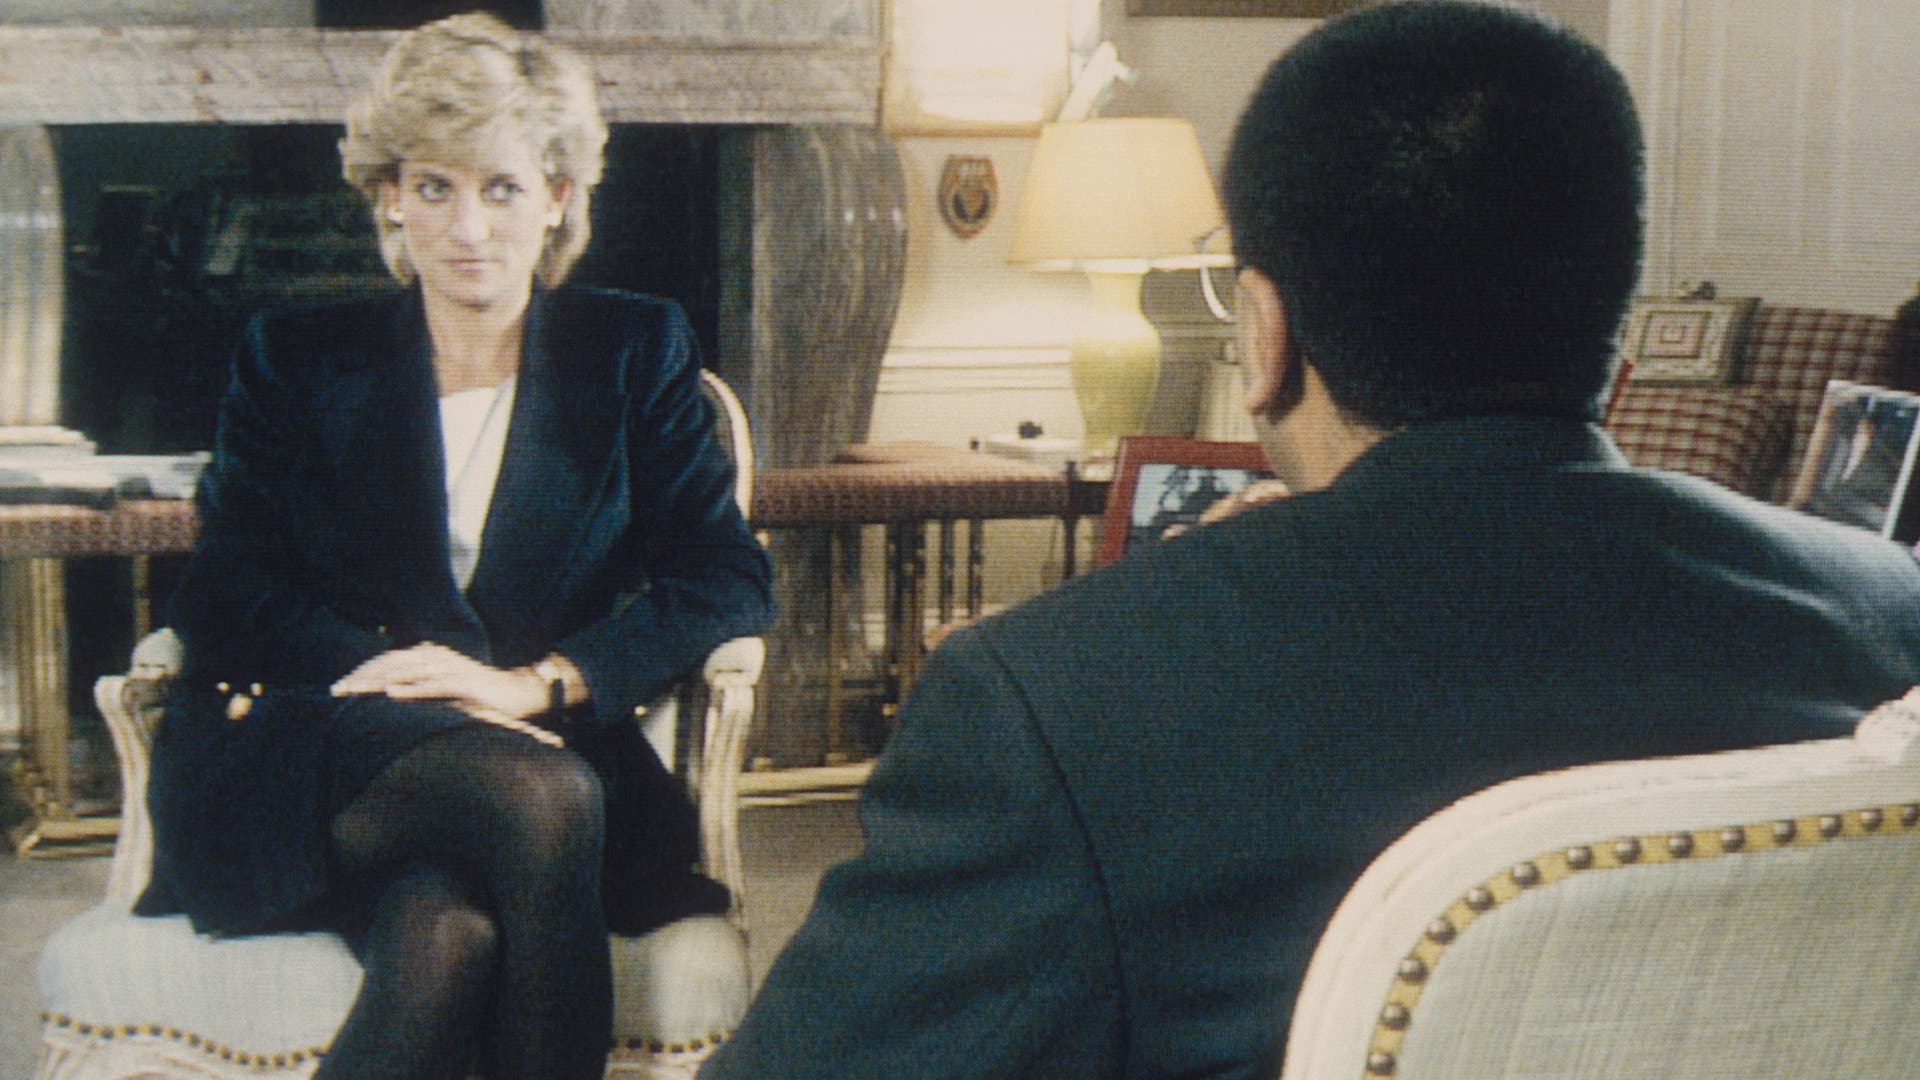 Martin Bashir interviews Princess Diana in Kensington Palace in November 1995 for the television program Panorama.